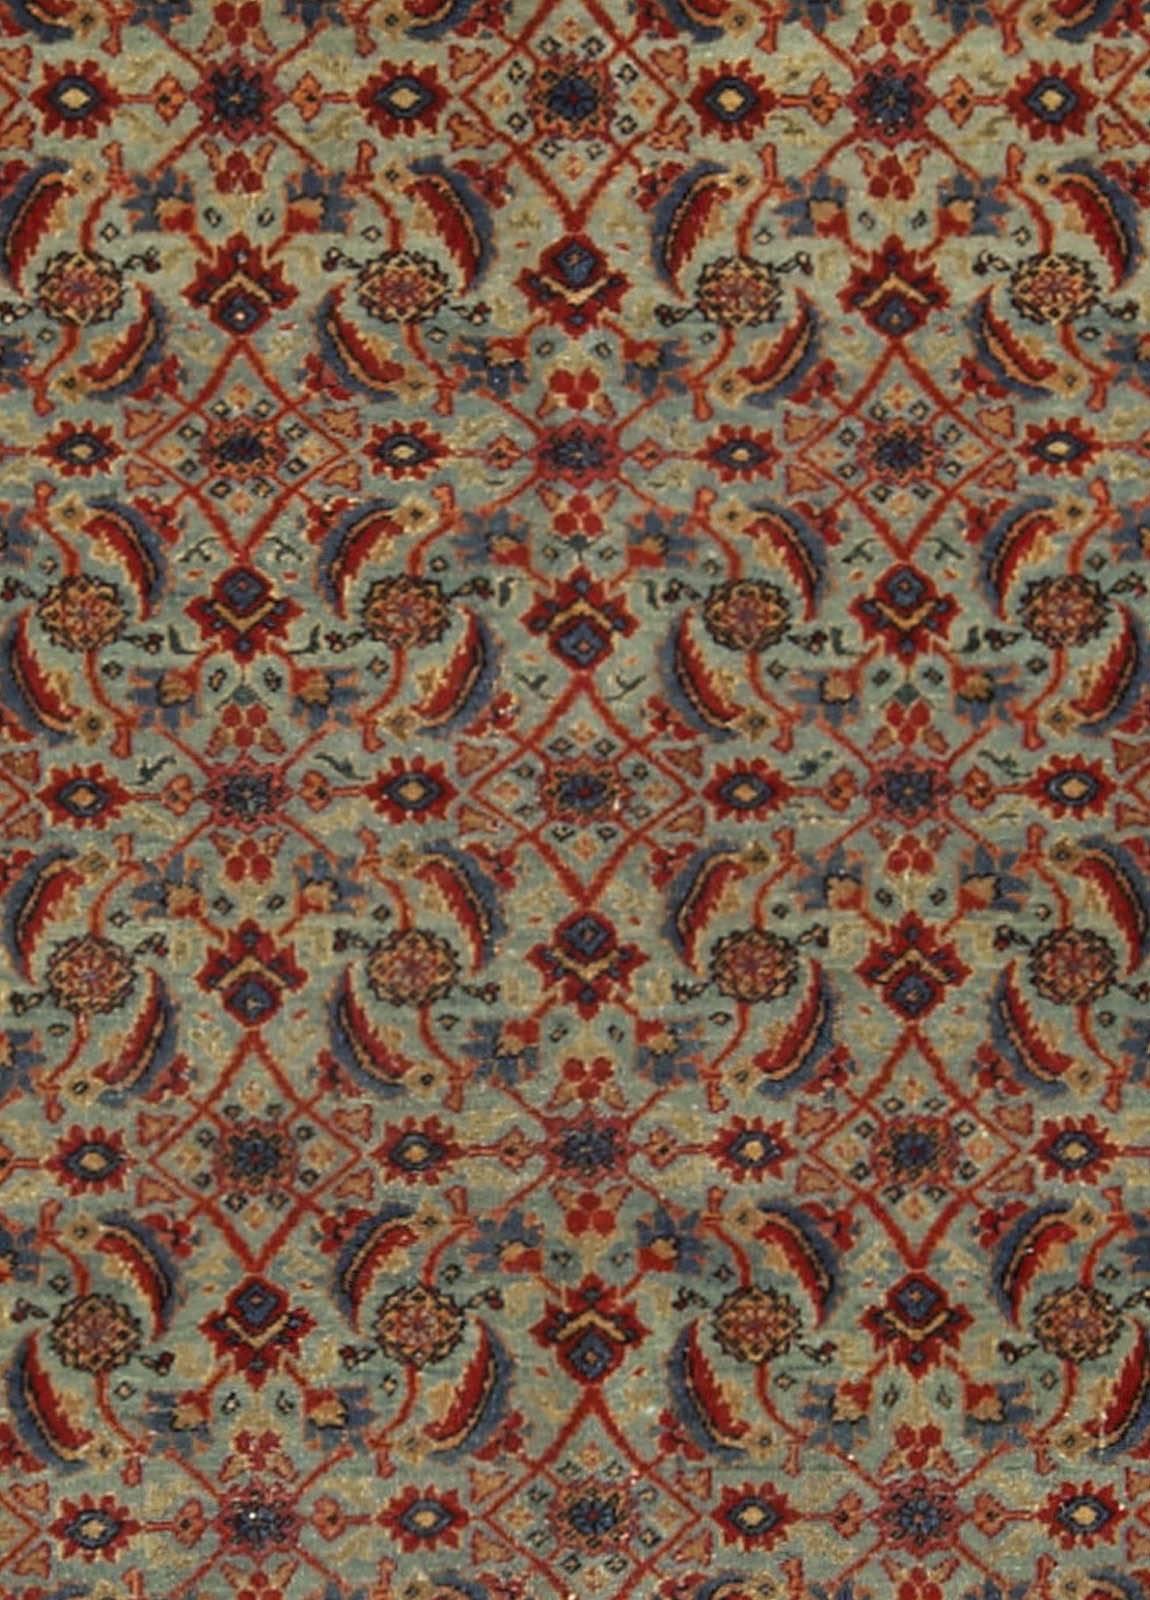 One-of-a-kind 19th century Persian Tabriz handmade wool rug
Size: 4'10